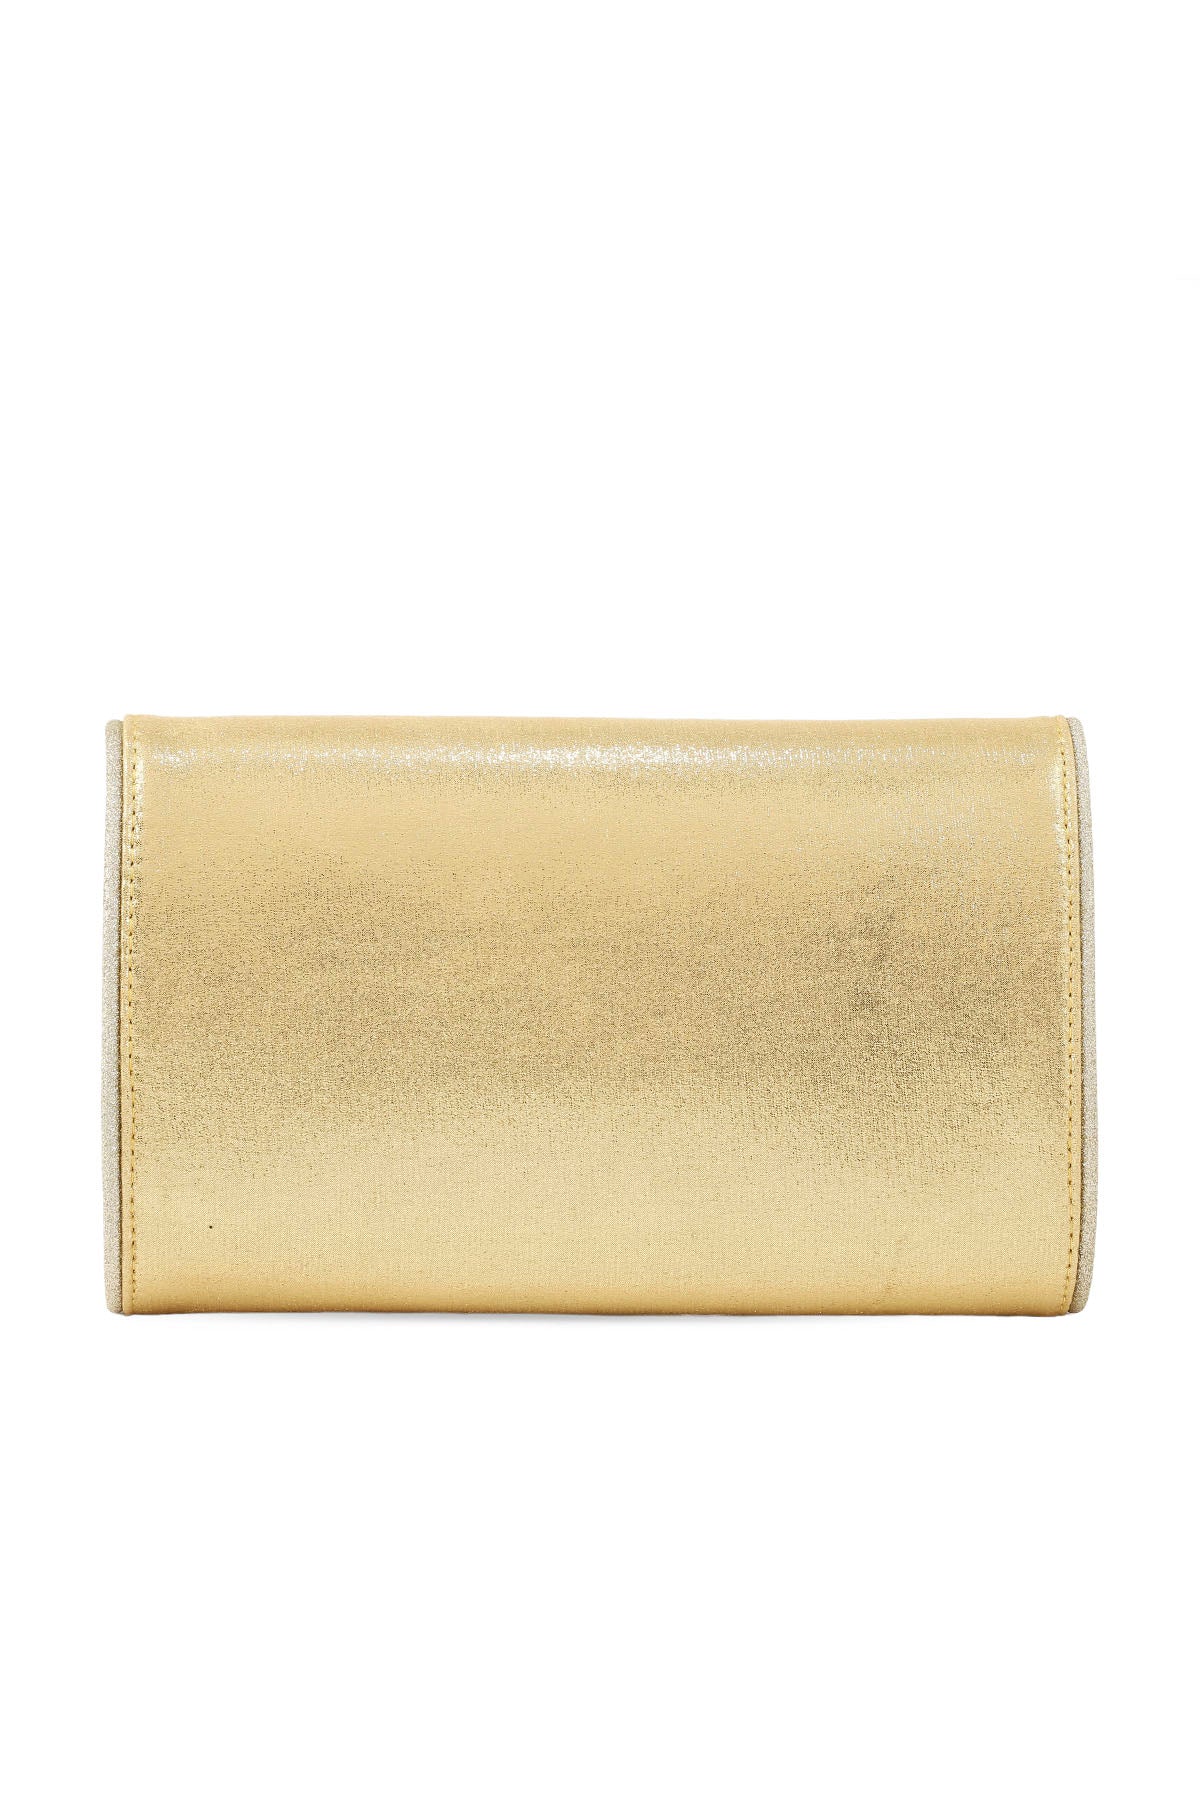 Envelope Clutch B21546-Mustard